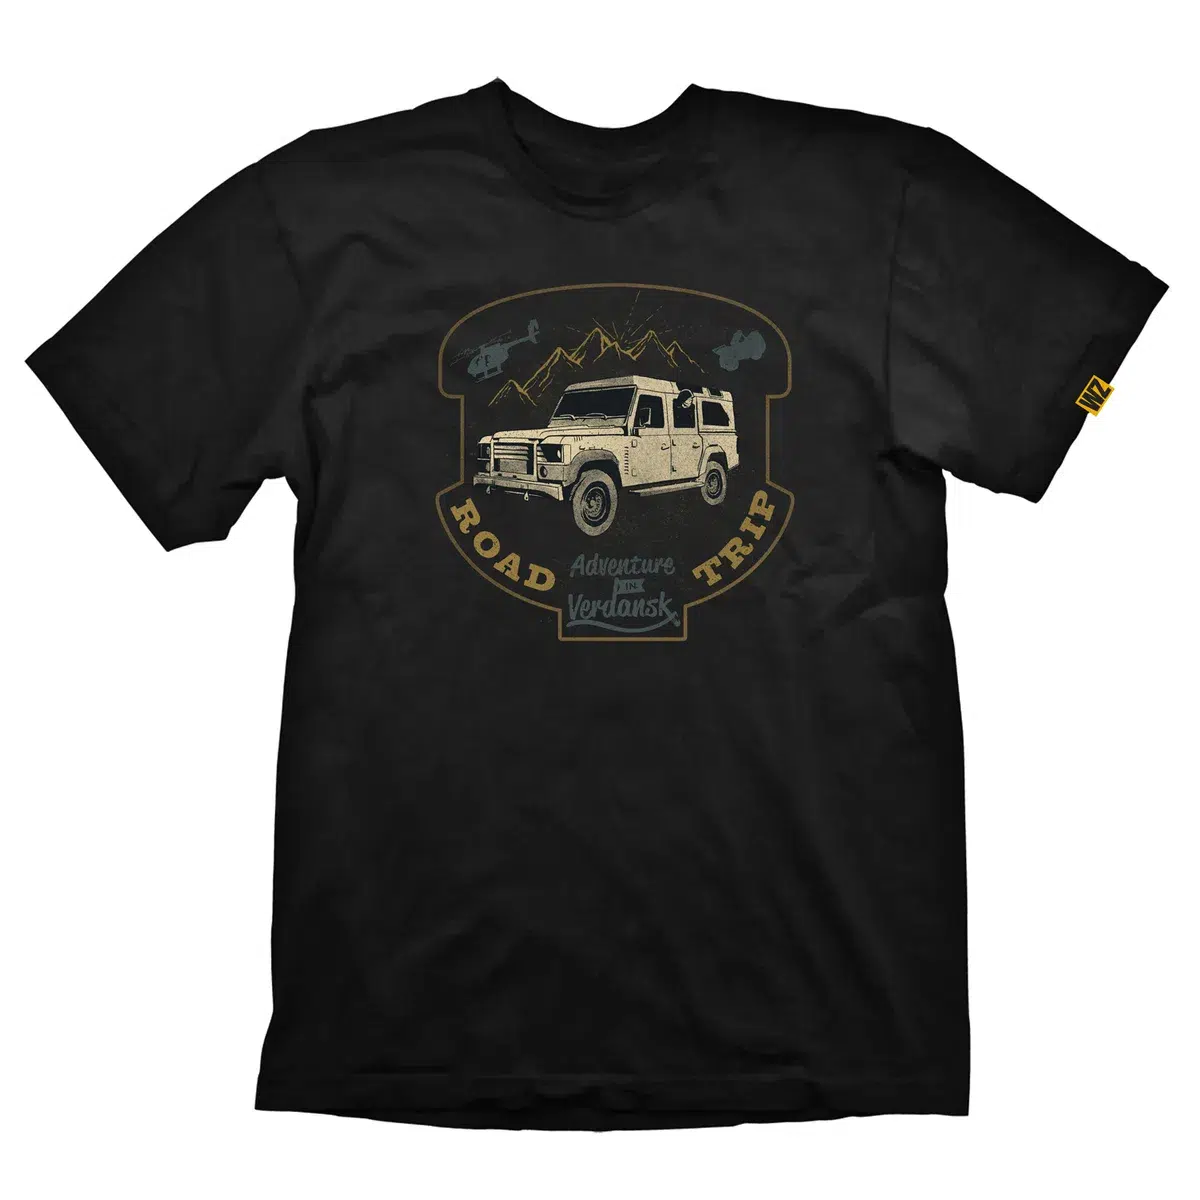 Call of Duty: WarzoneT-Shirt "Road Trip" Black XL